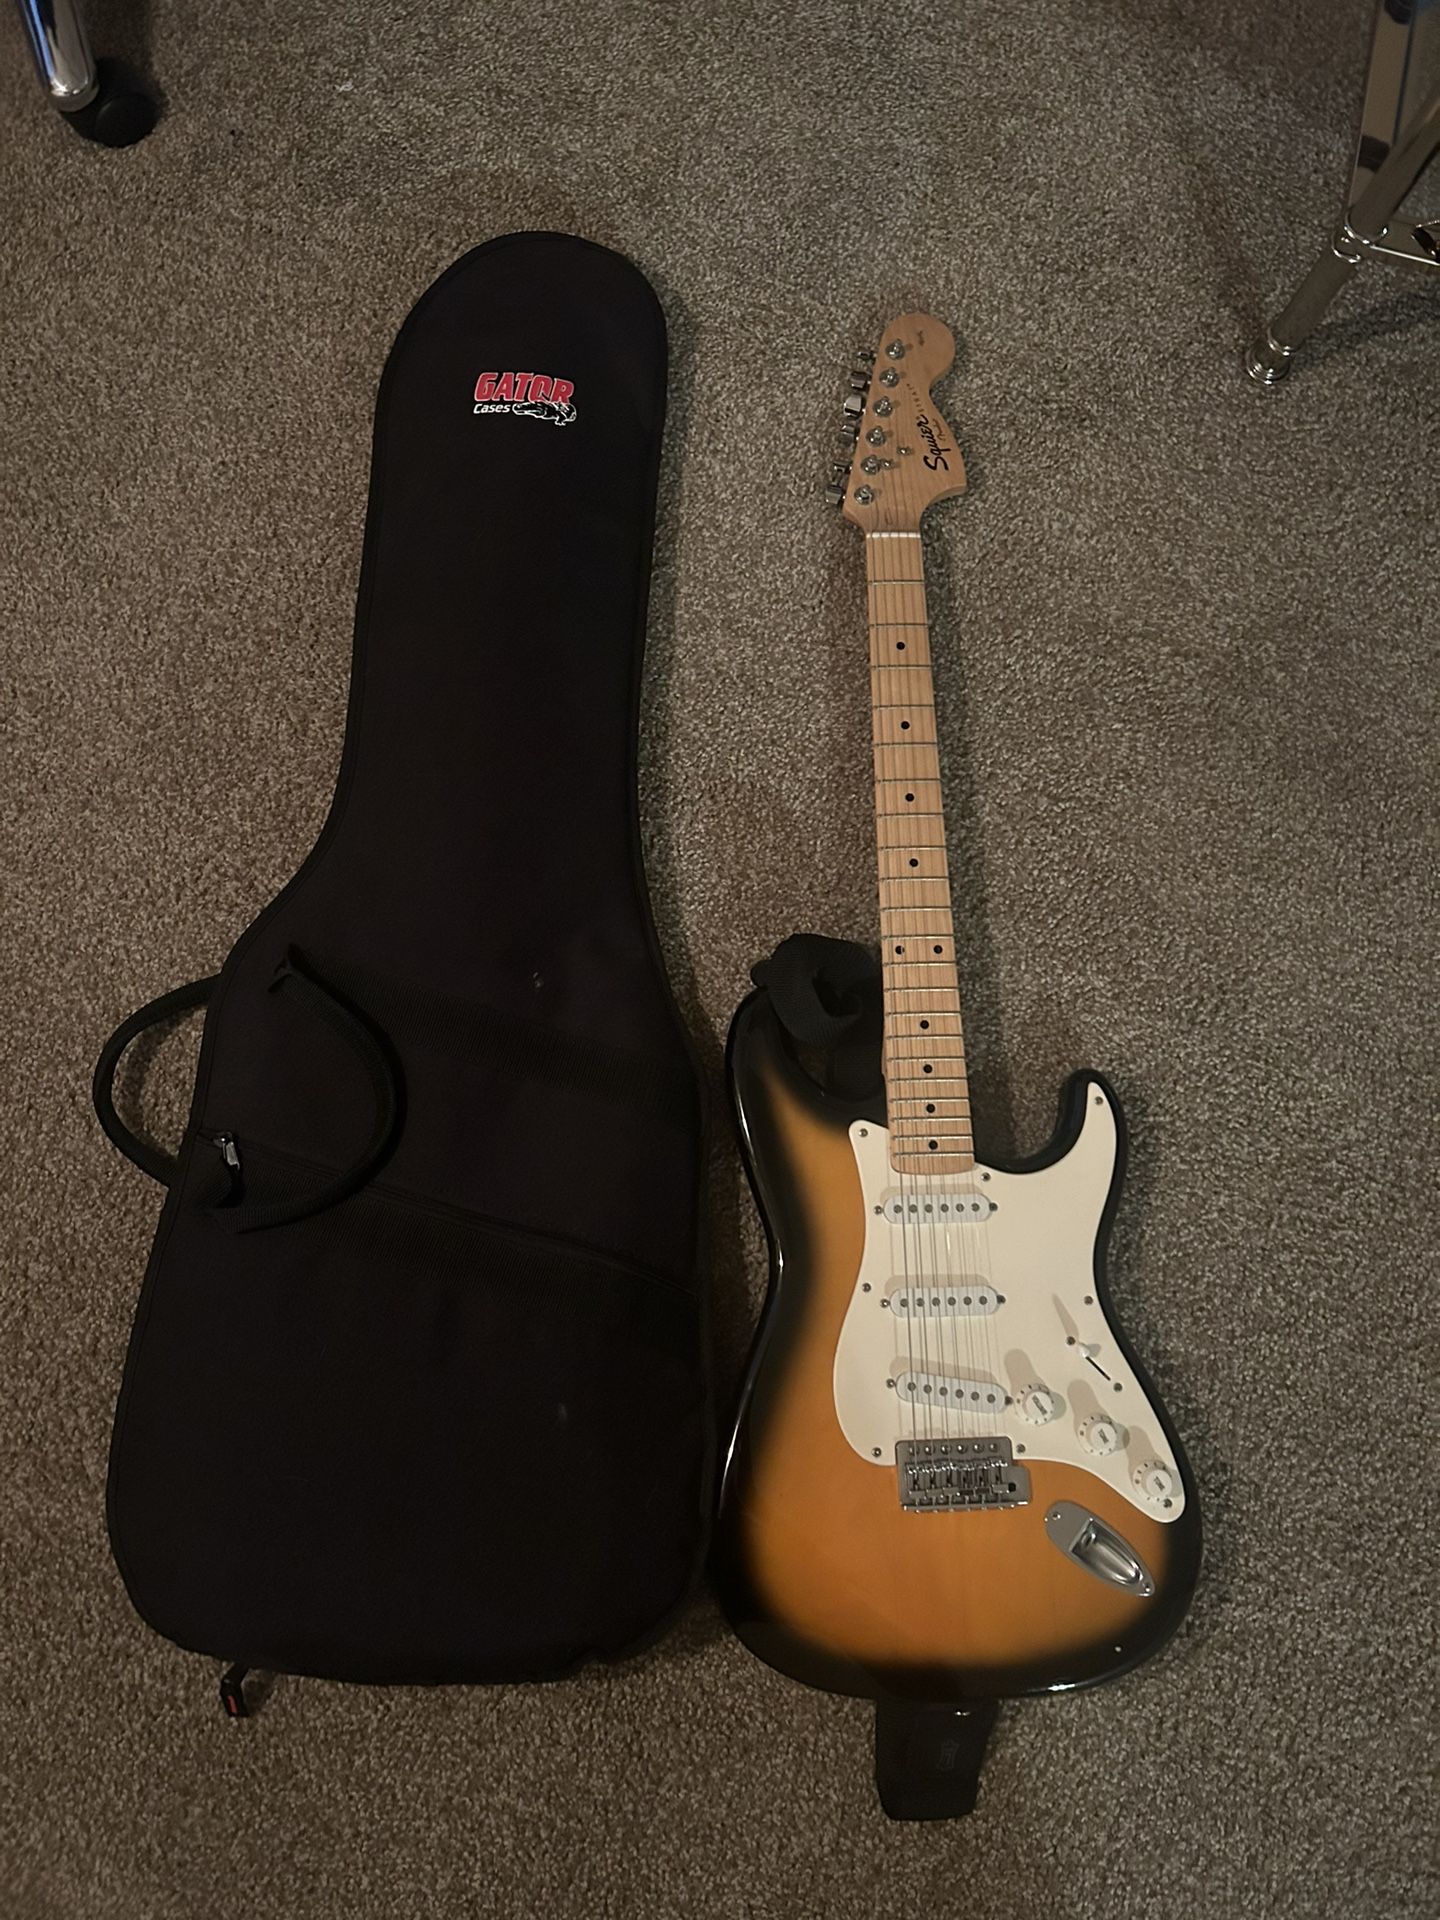 Squier Strat Fender Guitar